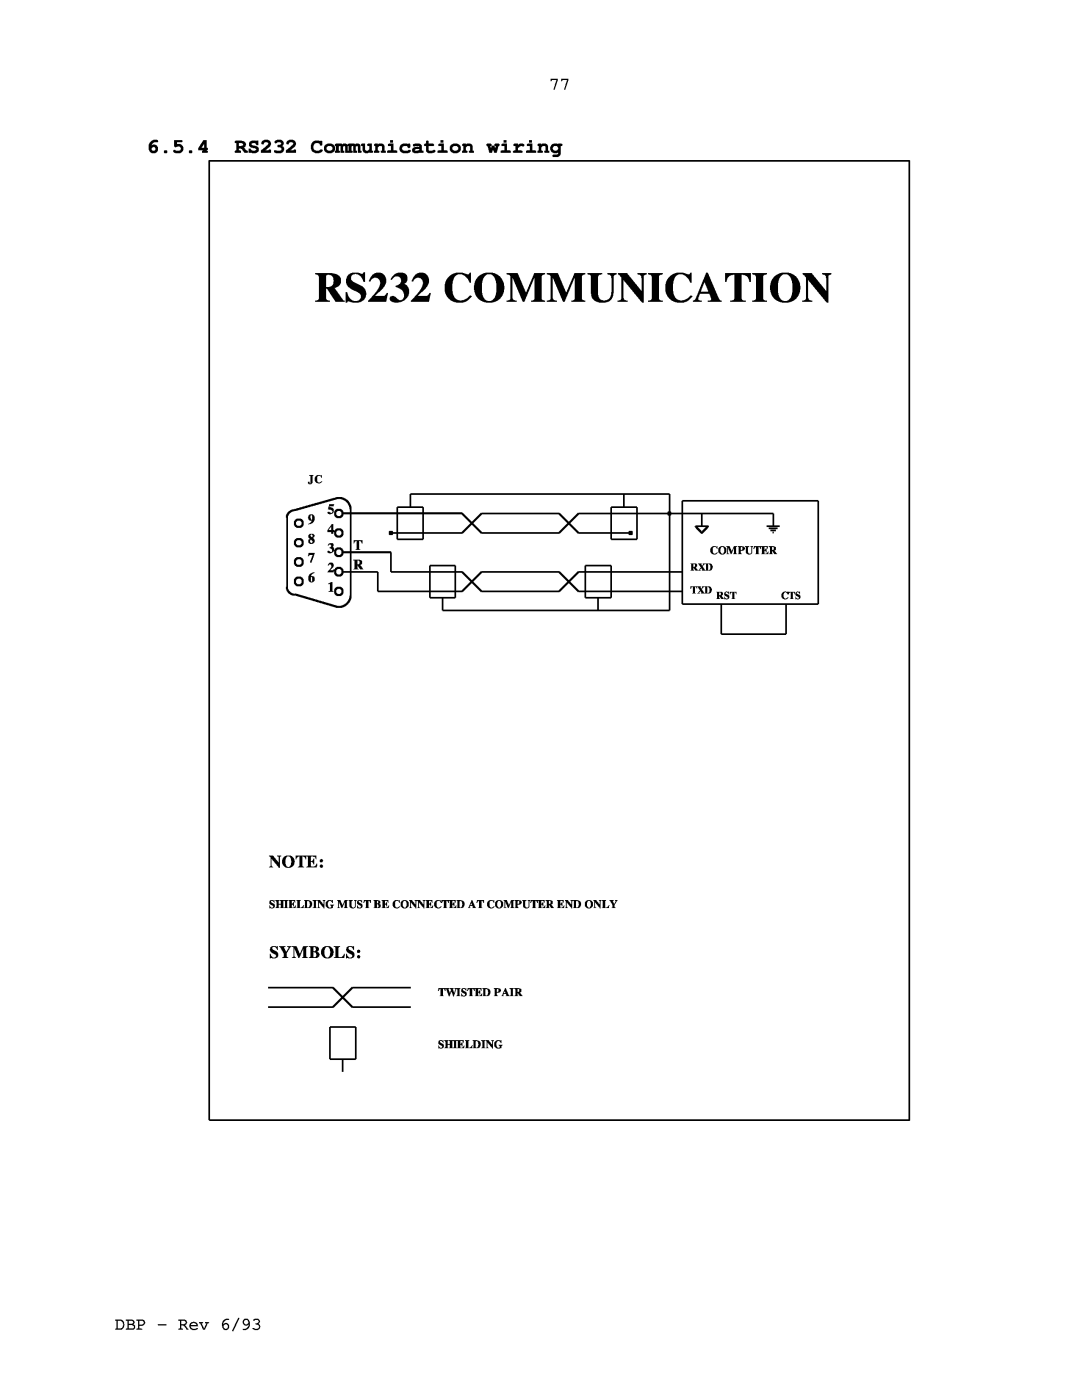 Elmo DBP SERIES manual RS232 COMMUNICATION, 6.5.4 RS232 Communication wiring, Symbols 